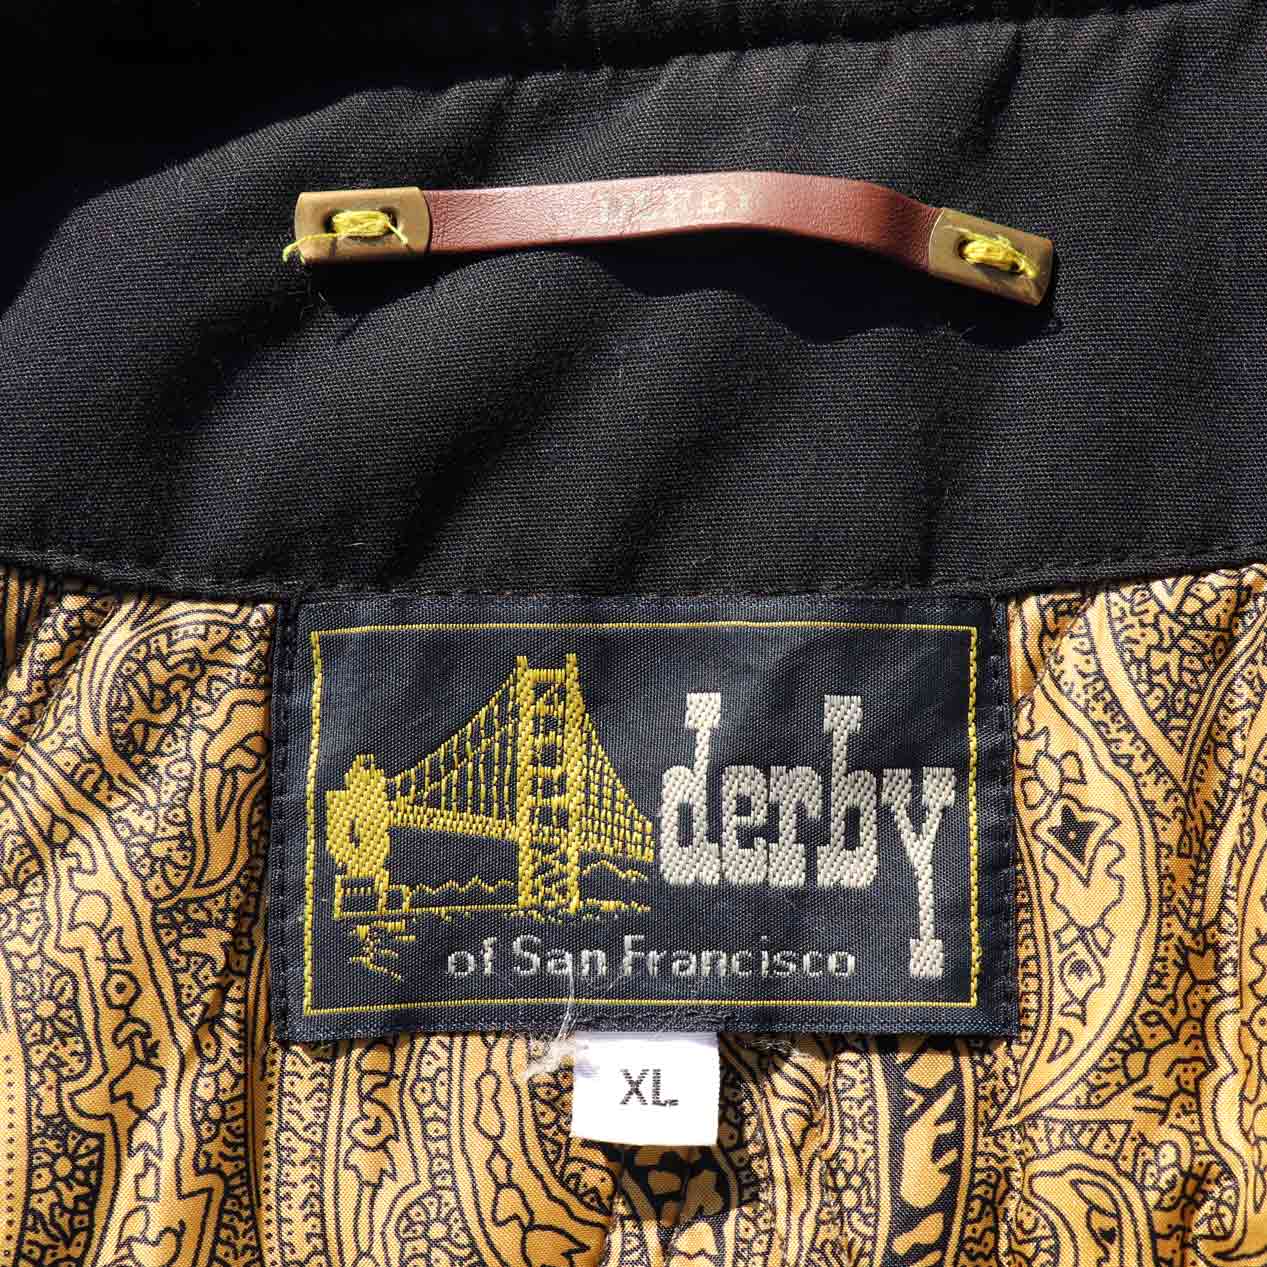 POST JUNK / 00's～ DERBY OF SAN FRANCISCO Black Derby Jacket [XL]